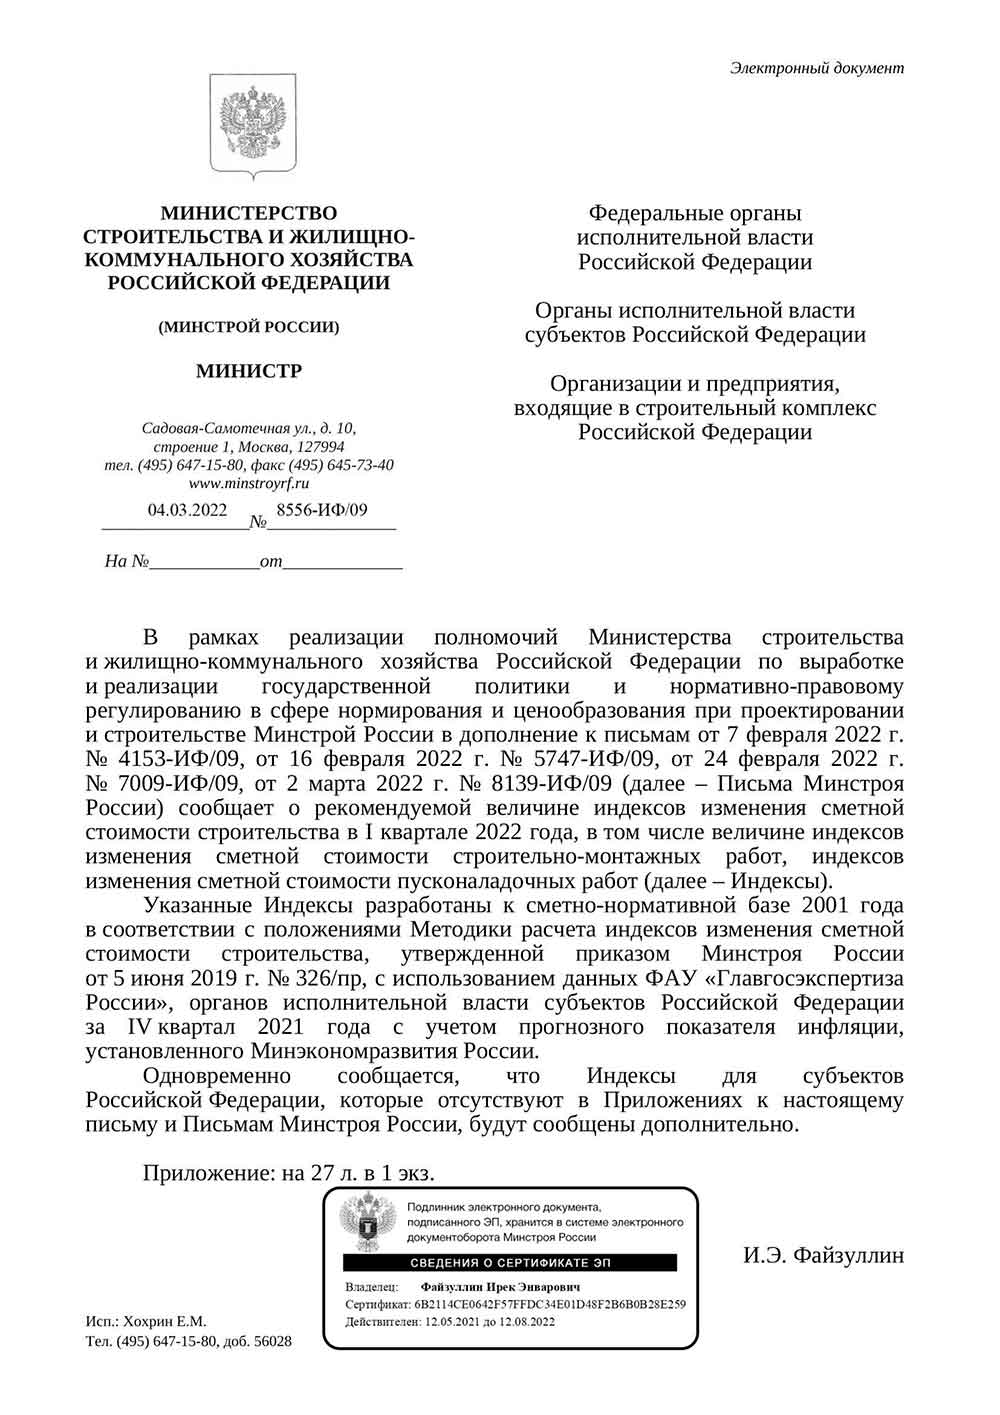 Письмо Минстроя РФ №8556-ИФ/09 от 04.03.2022 г.